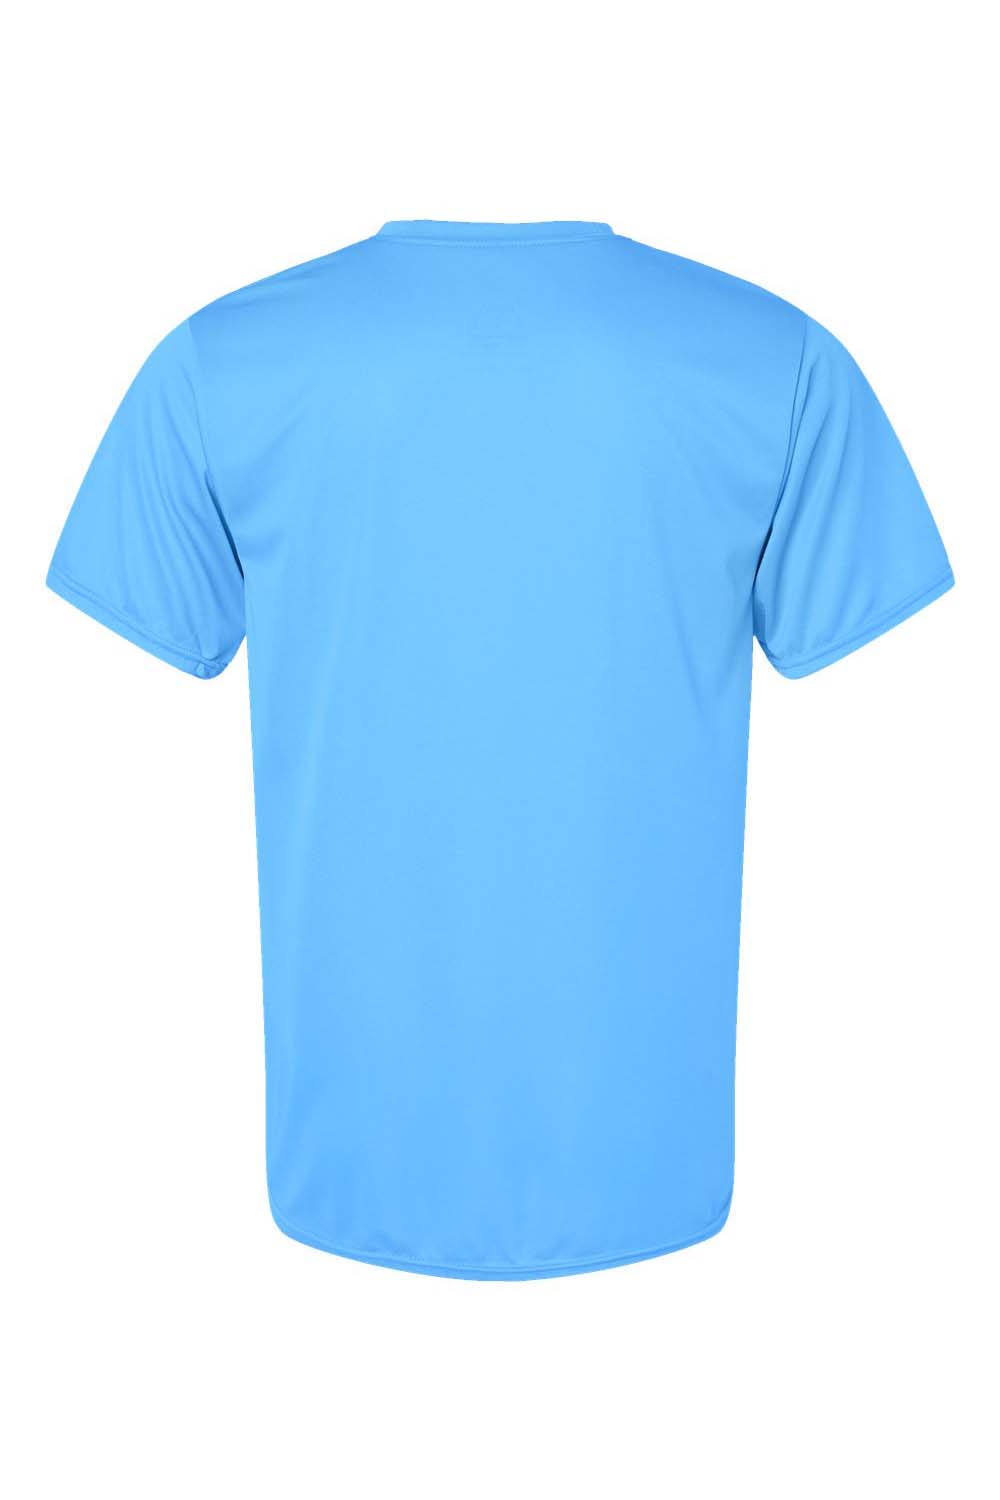 Augusta Sportswear 790 Mens Moisture Wicking Short Sleeve Crewneck T-Shirt Columbia Blue Model Flat Back